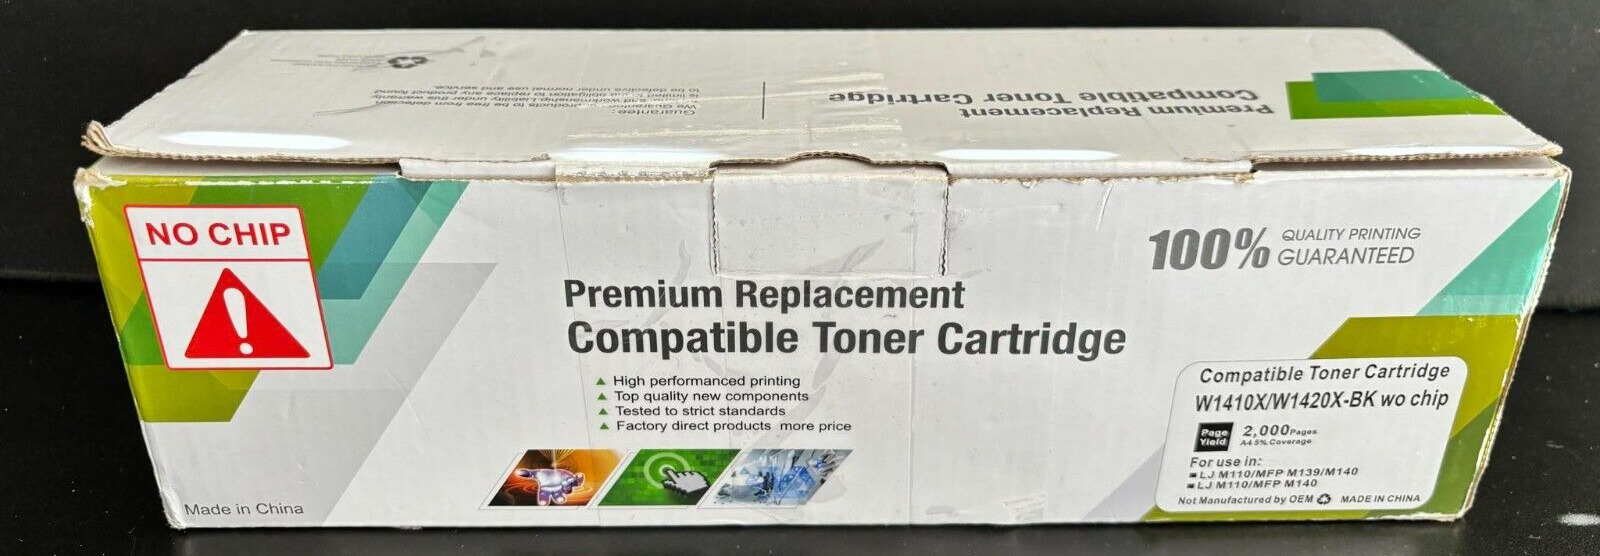 Premium Replacement Compatible Tonner Cartridge